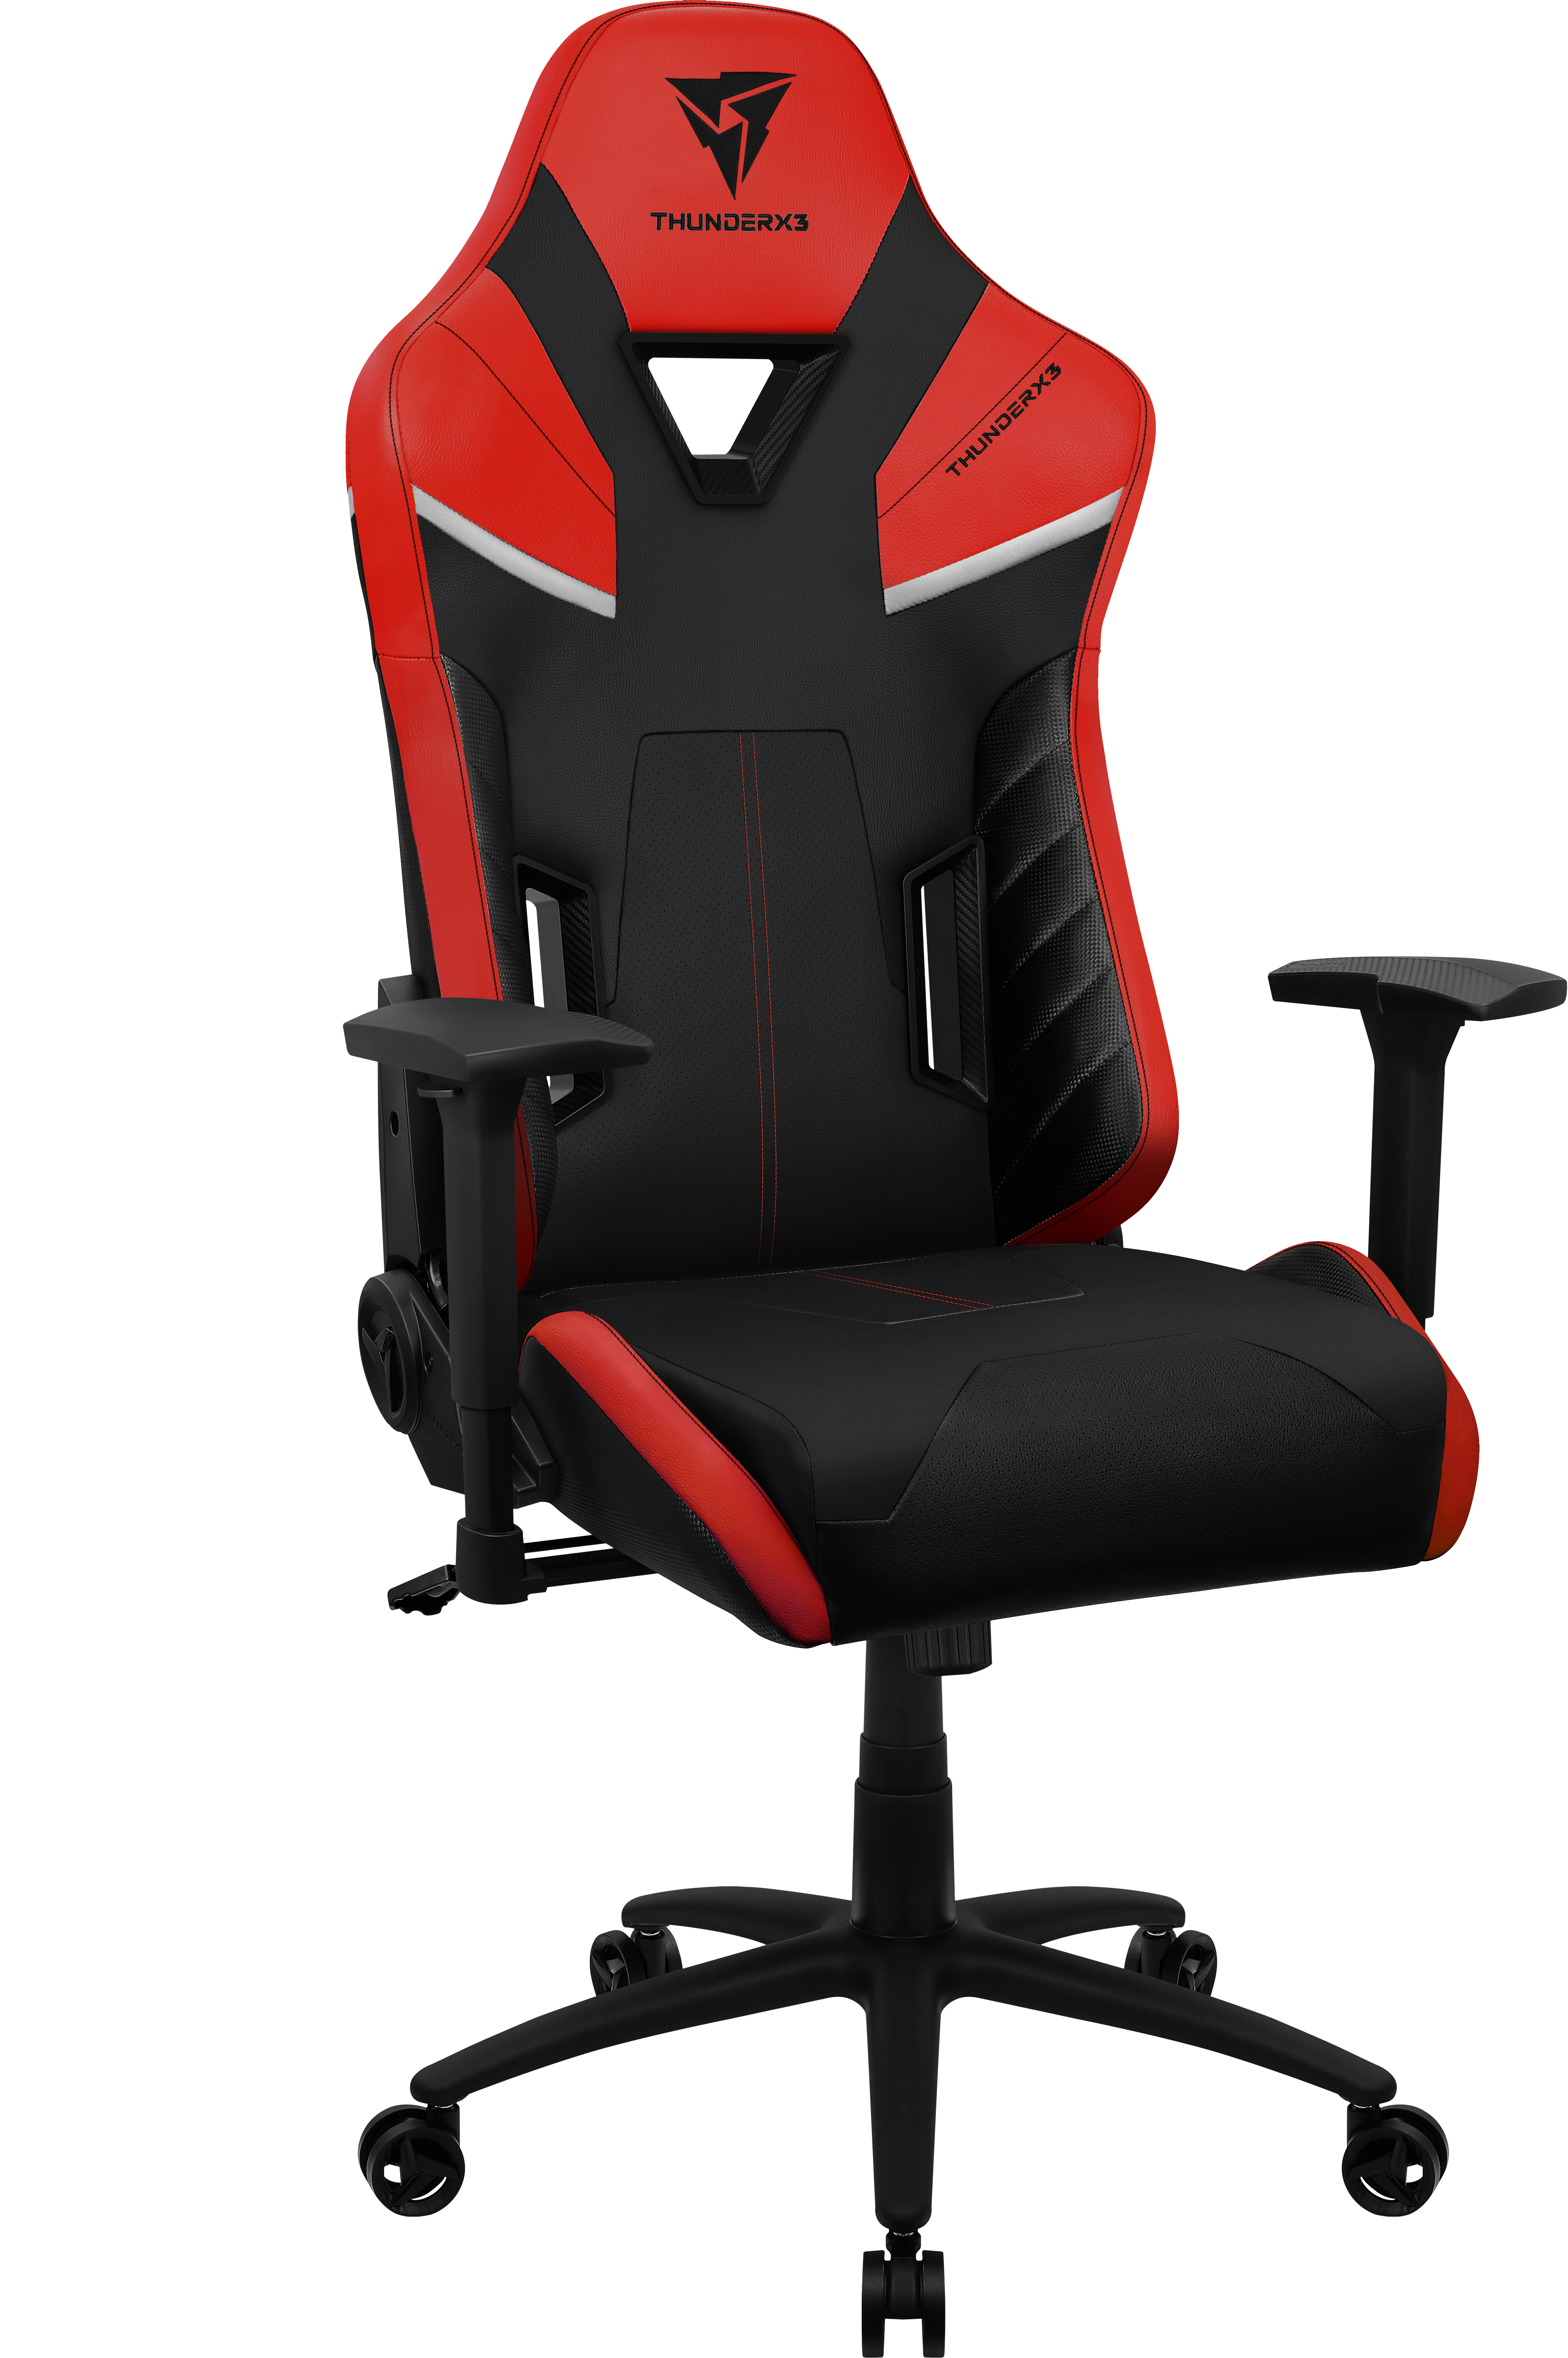 ThunderX3 - ThunderX3 TC5 MAX Gaming Chair - Ember Red